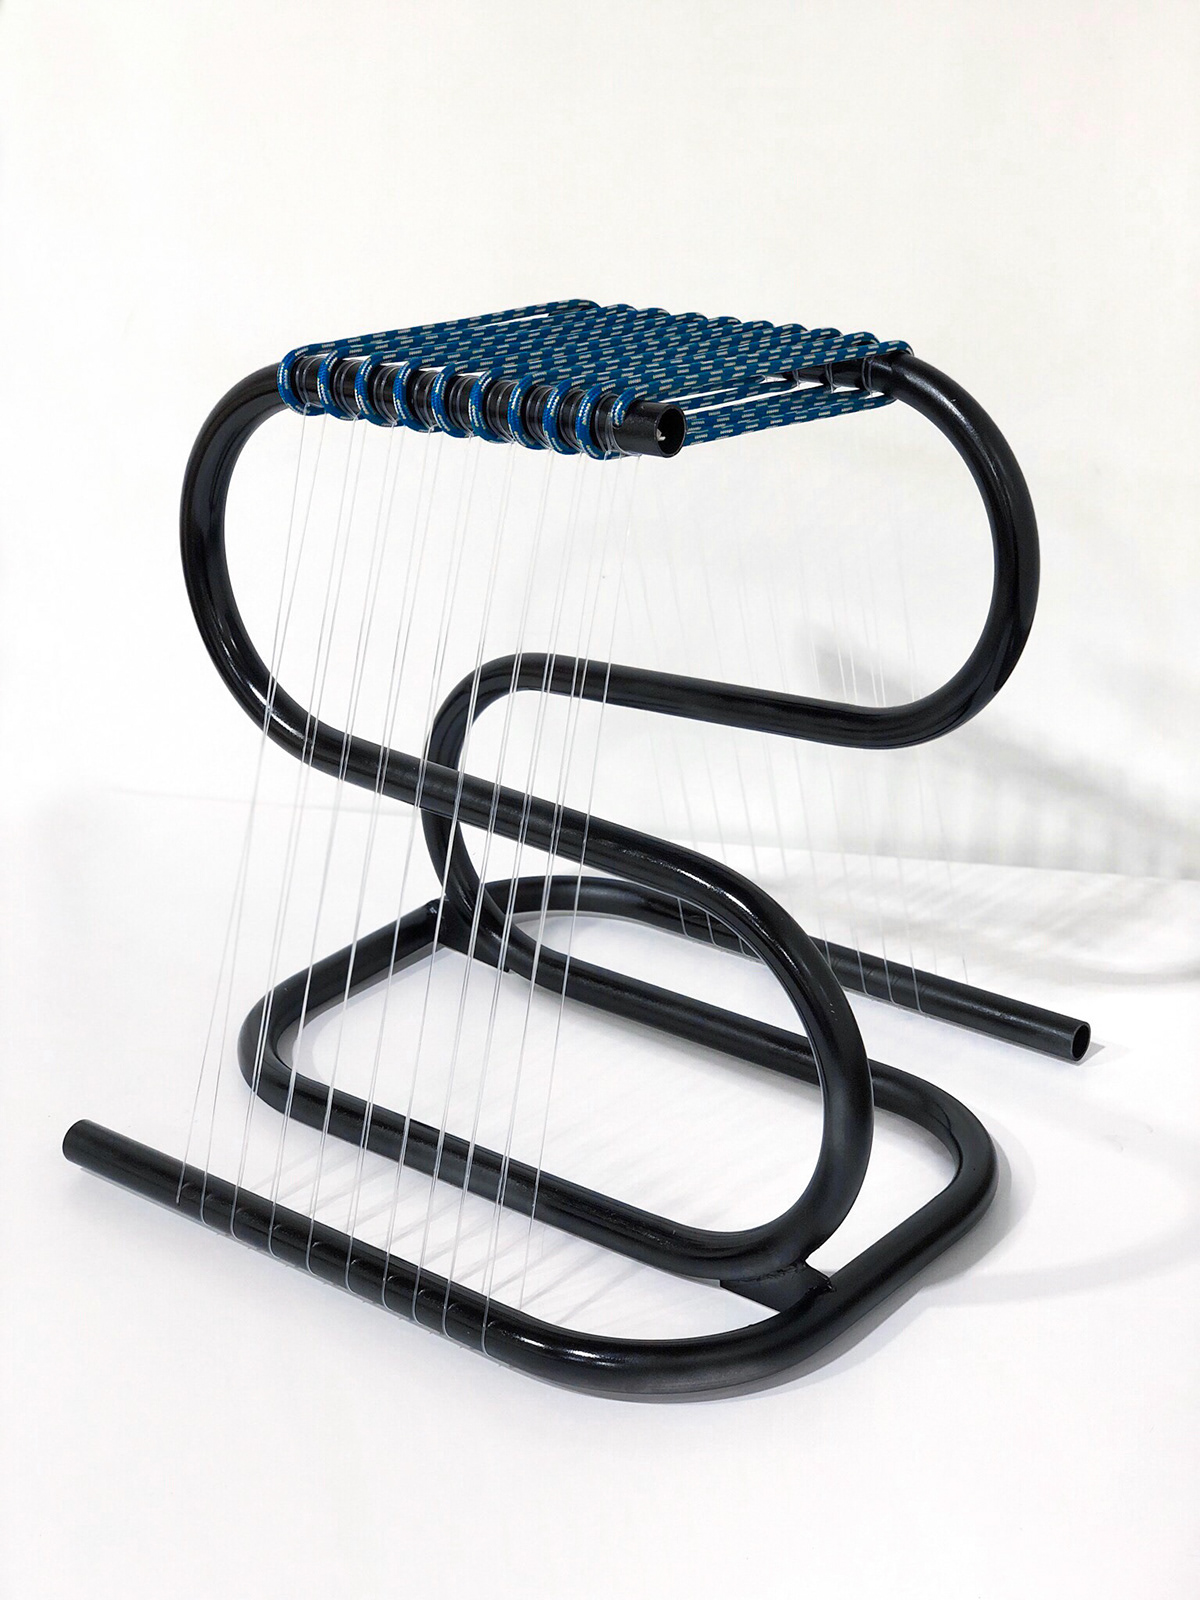 banco silla Tensoestructura cuerdas curvas fierro